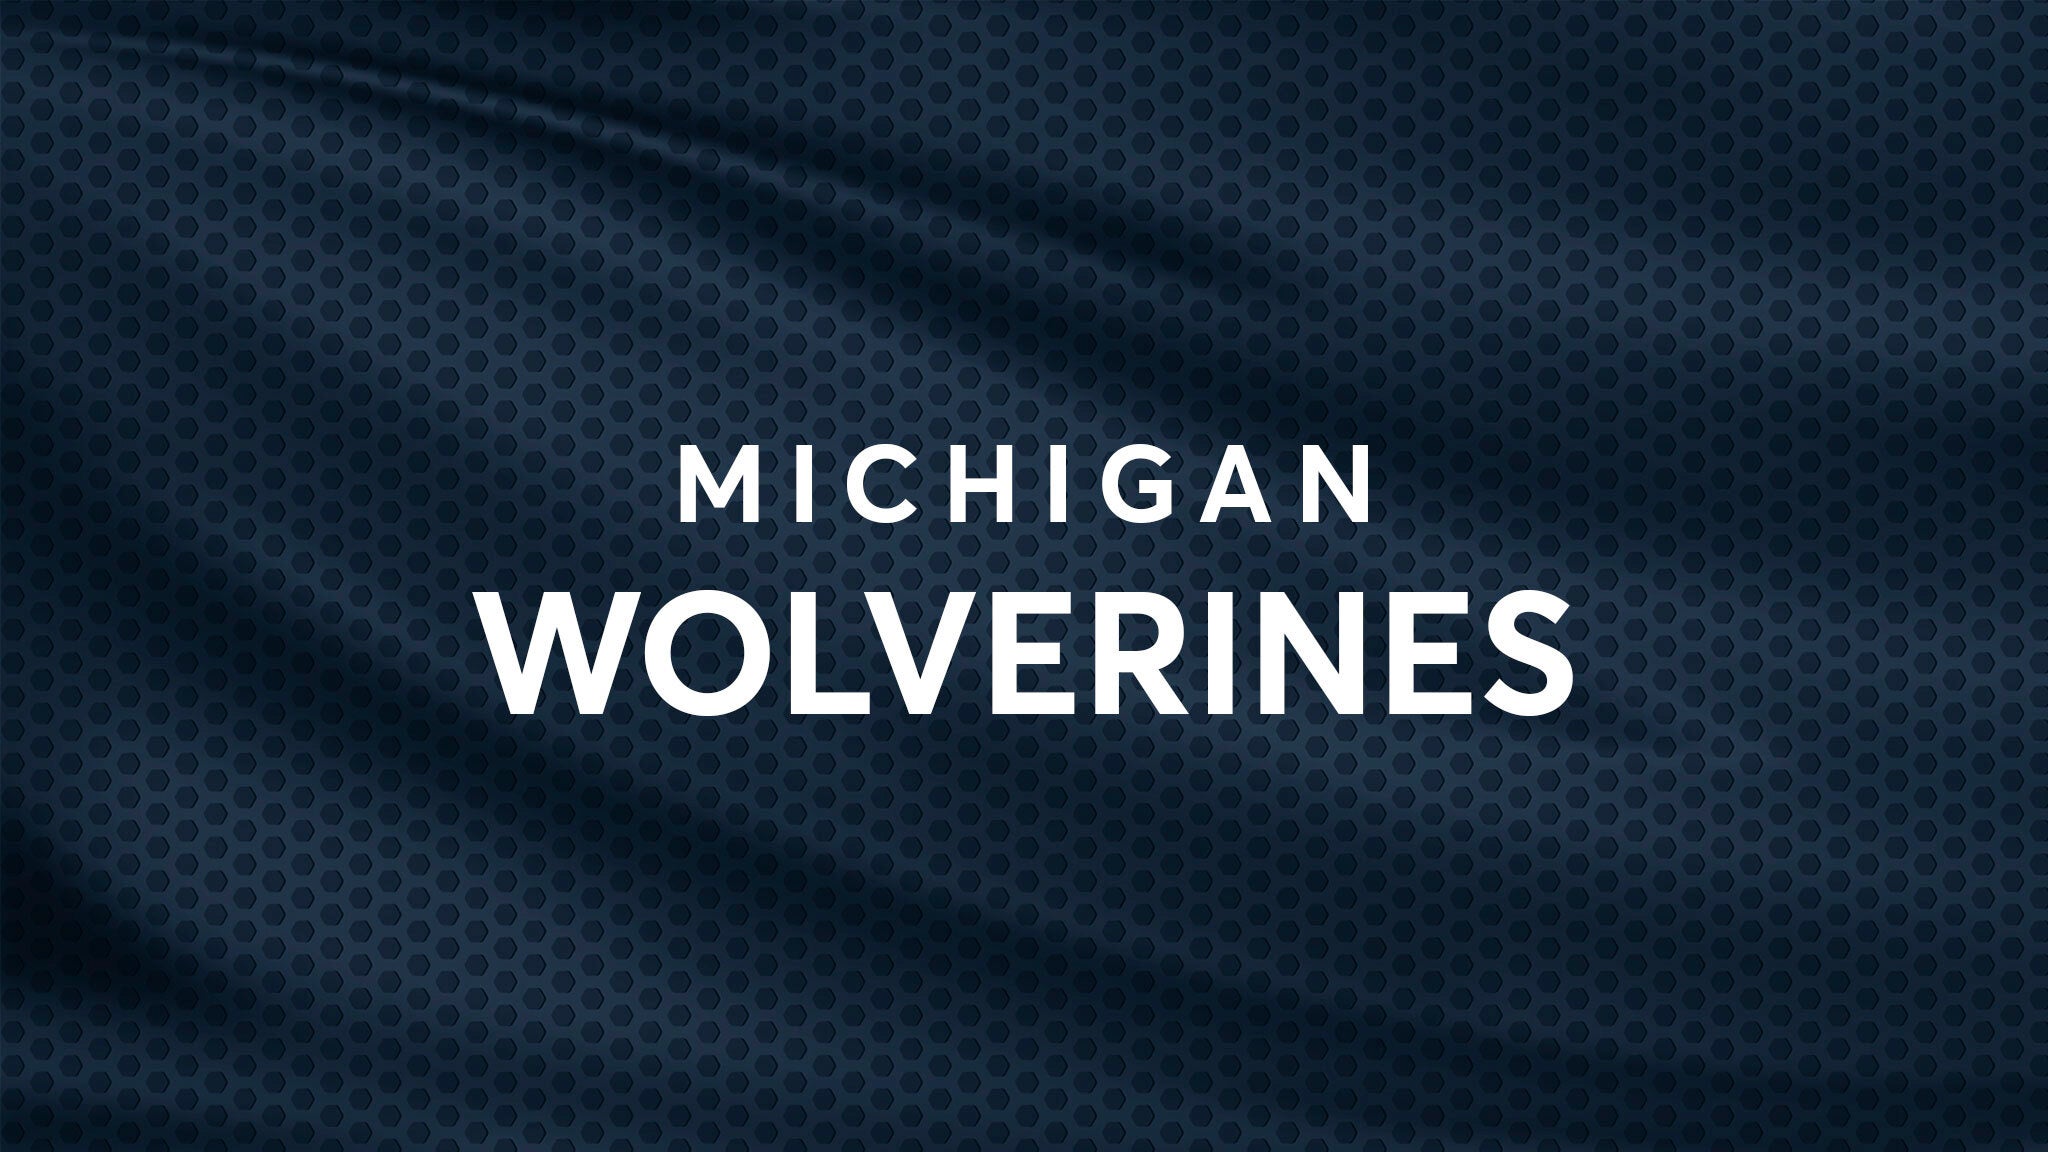 Michigan Wolverines Football vs. Northwestern Wildcats Football hero